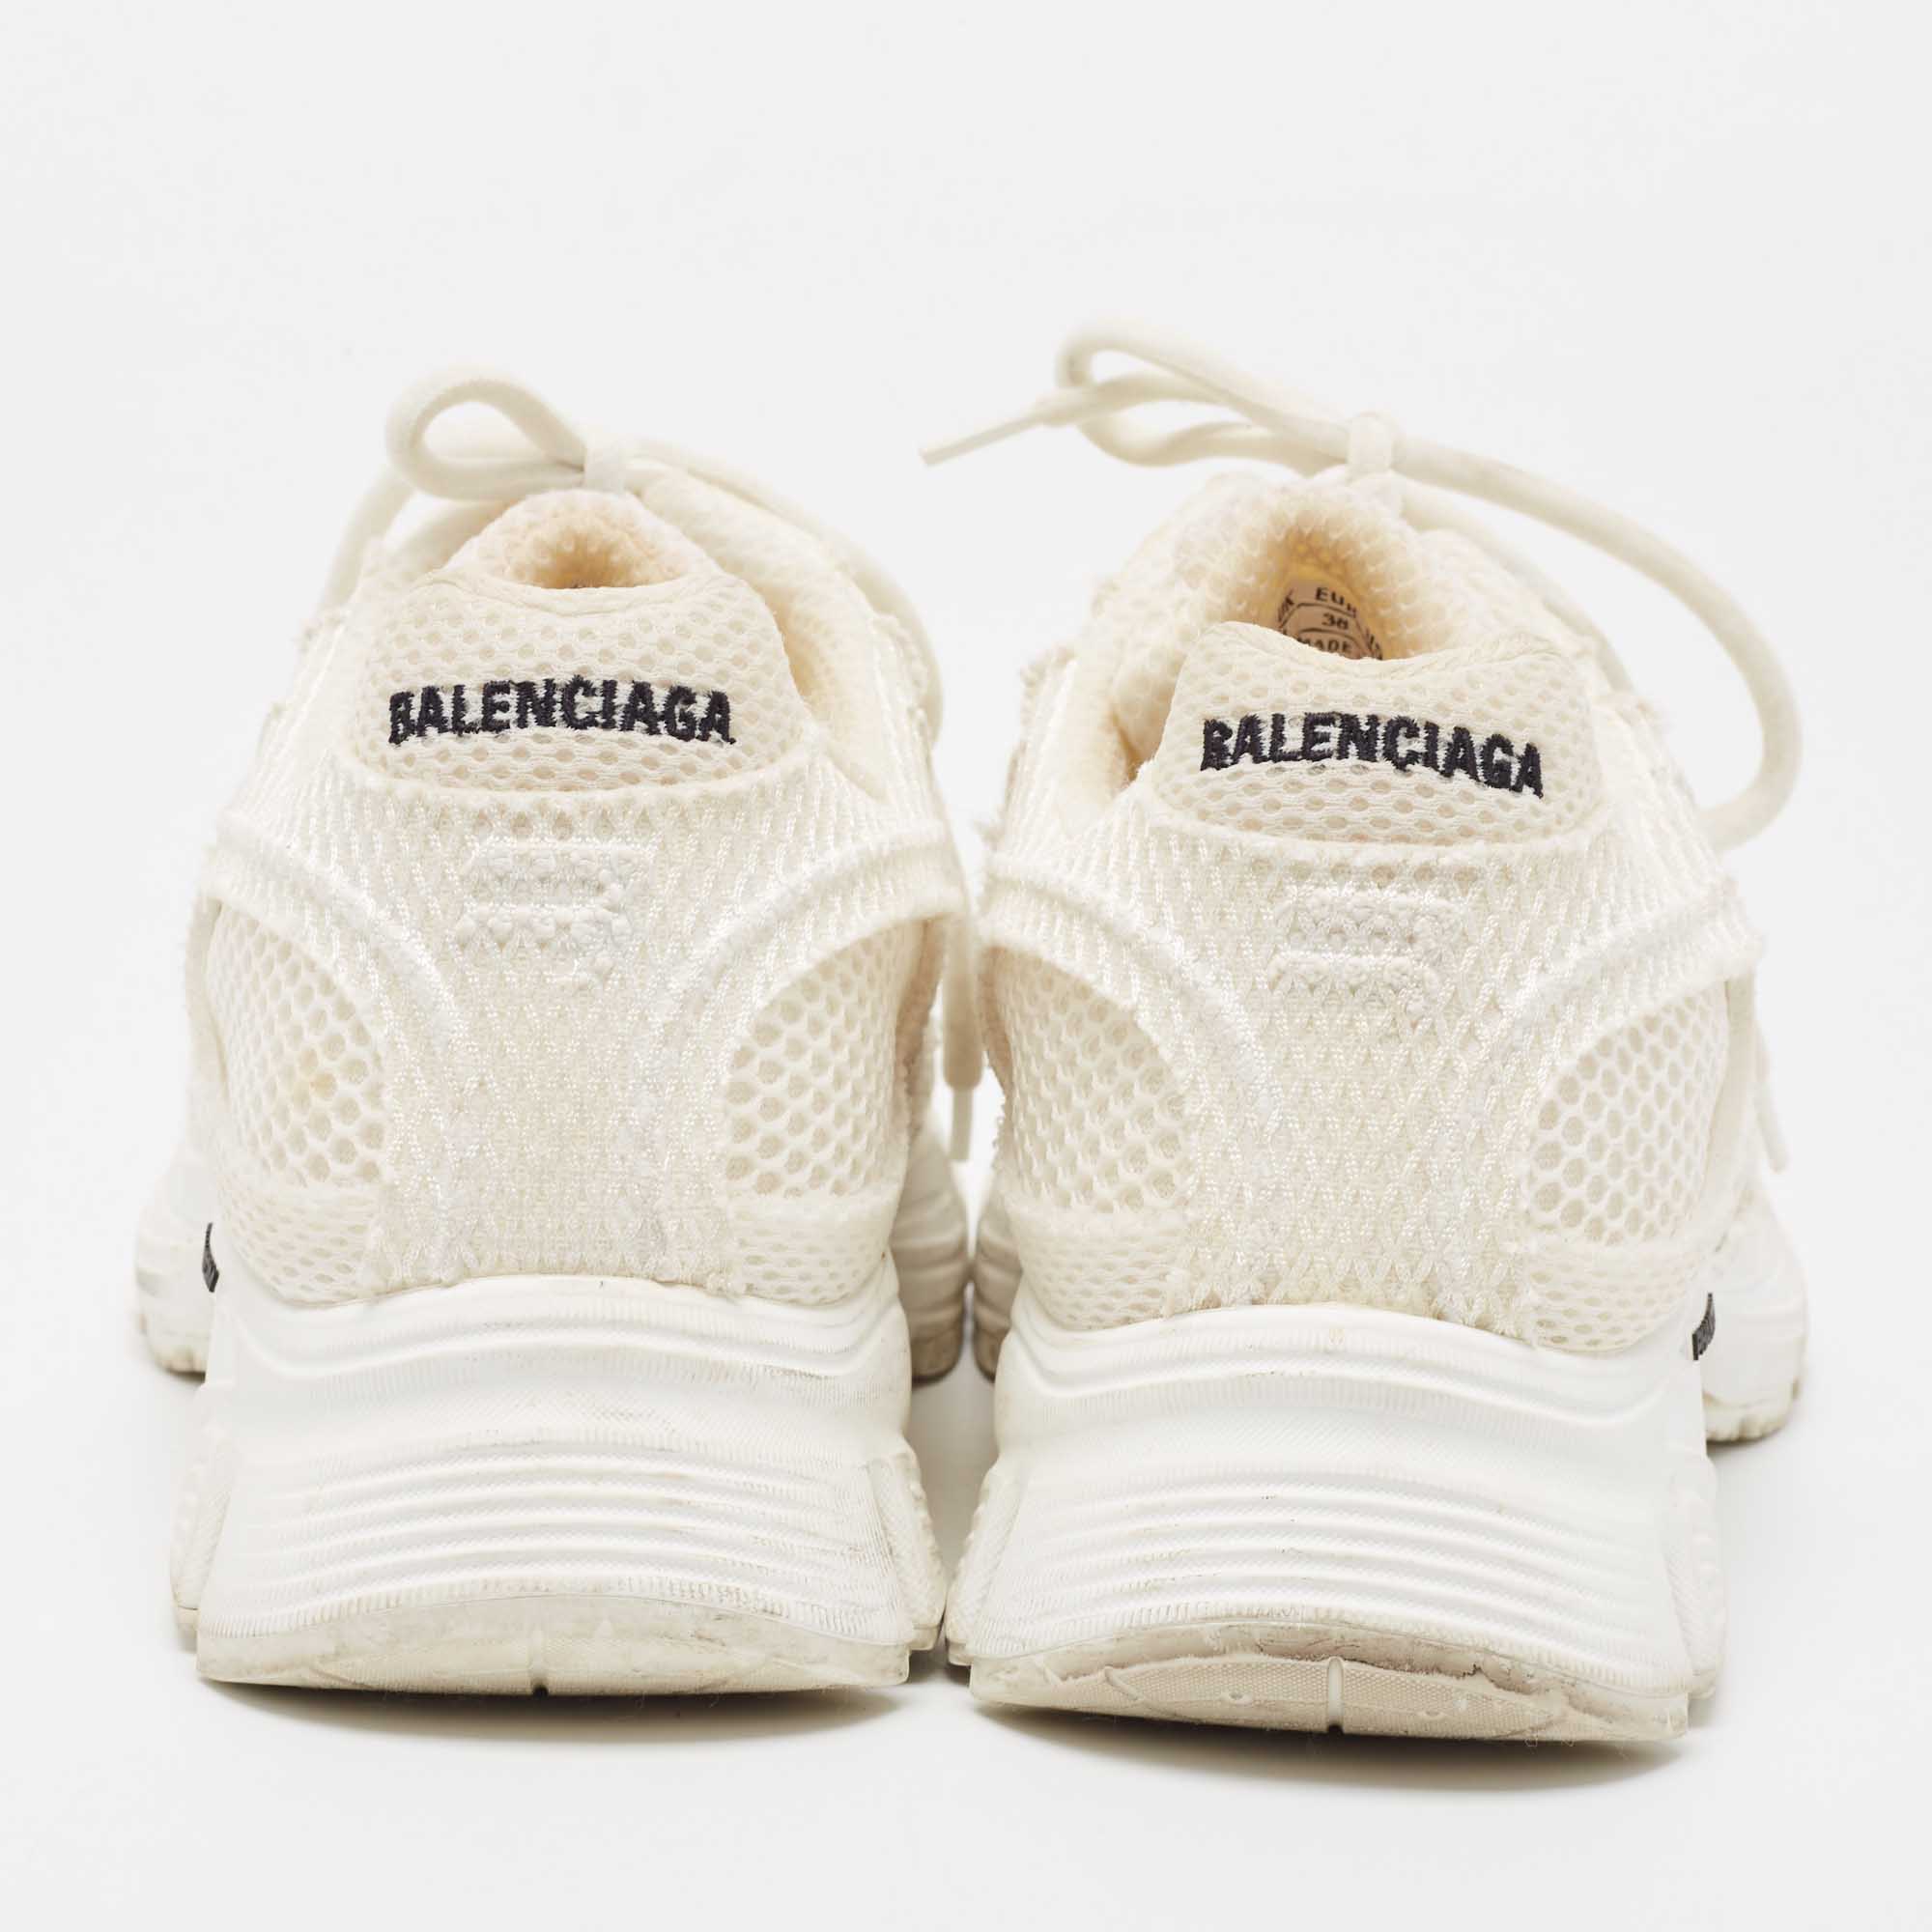 Balenciaga White Mesh Phantom Sneakers Size 38